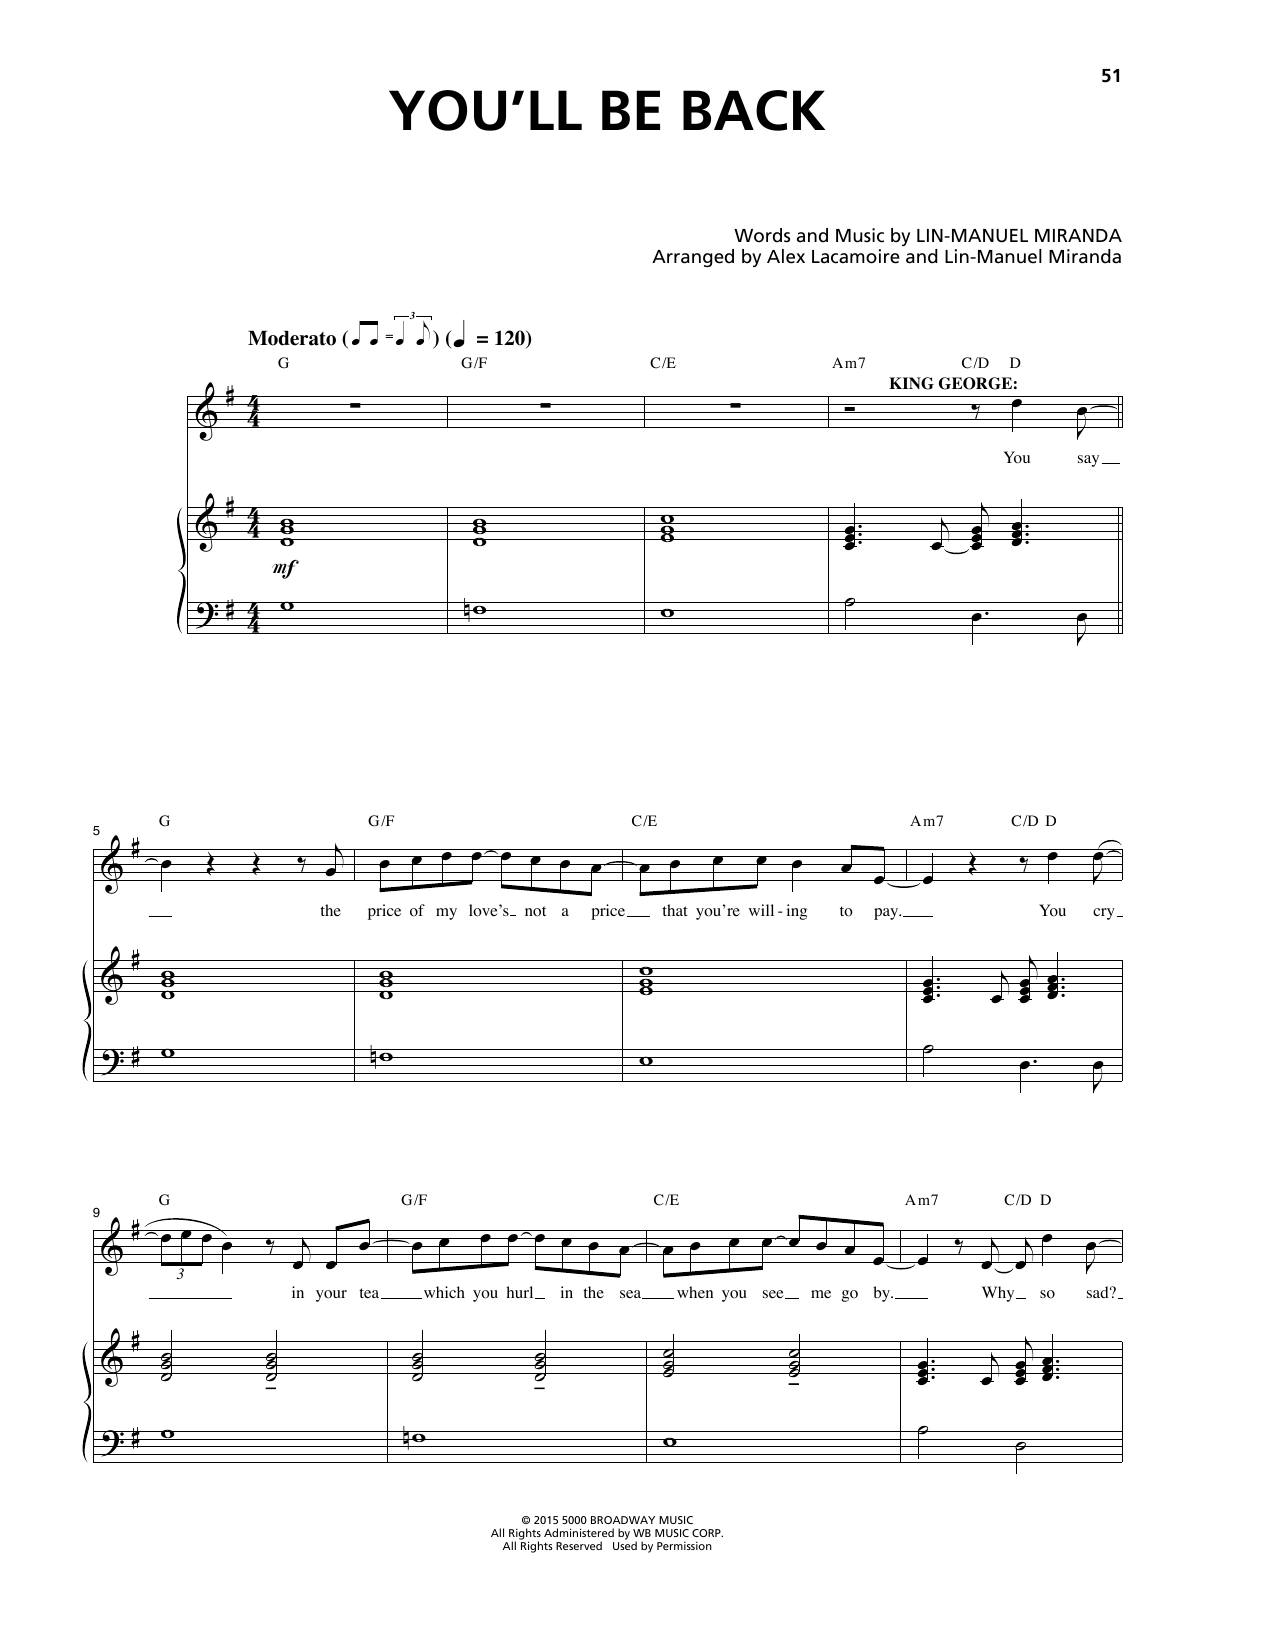 Lin-Manuel Miranda You'll Be Back (from Hamilton) Sheet Music Notes & Chords for Easy Piano - Download or Print PDF